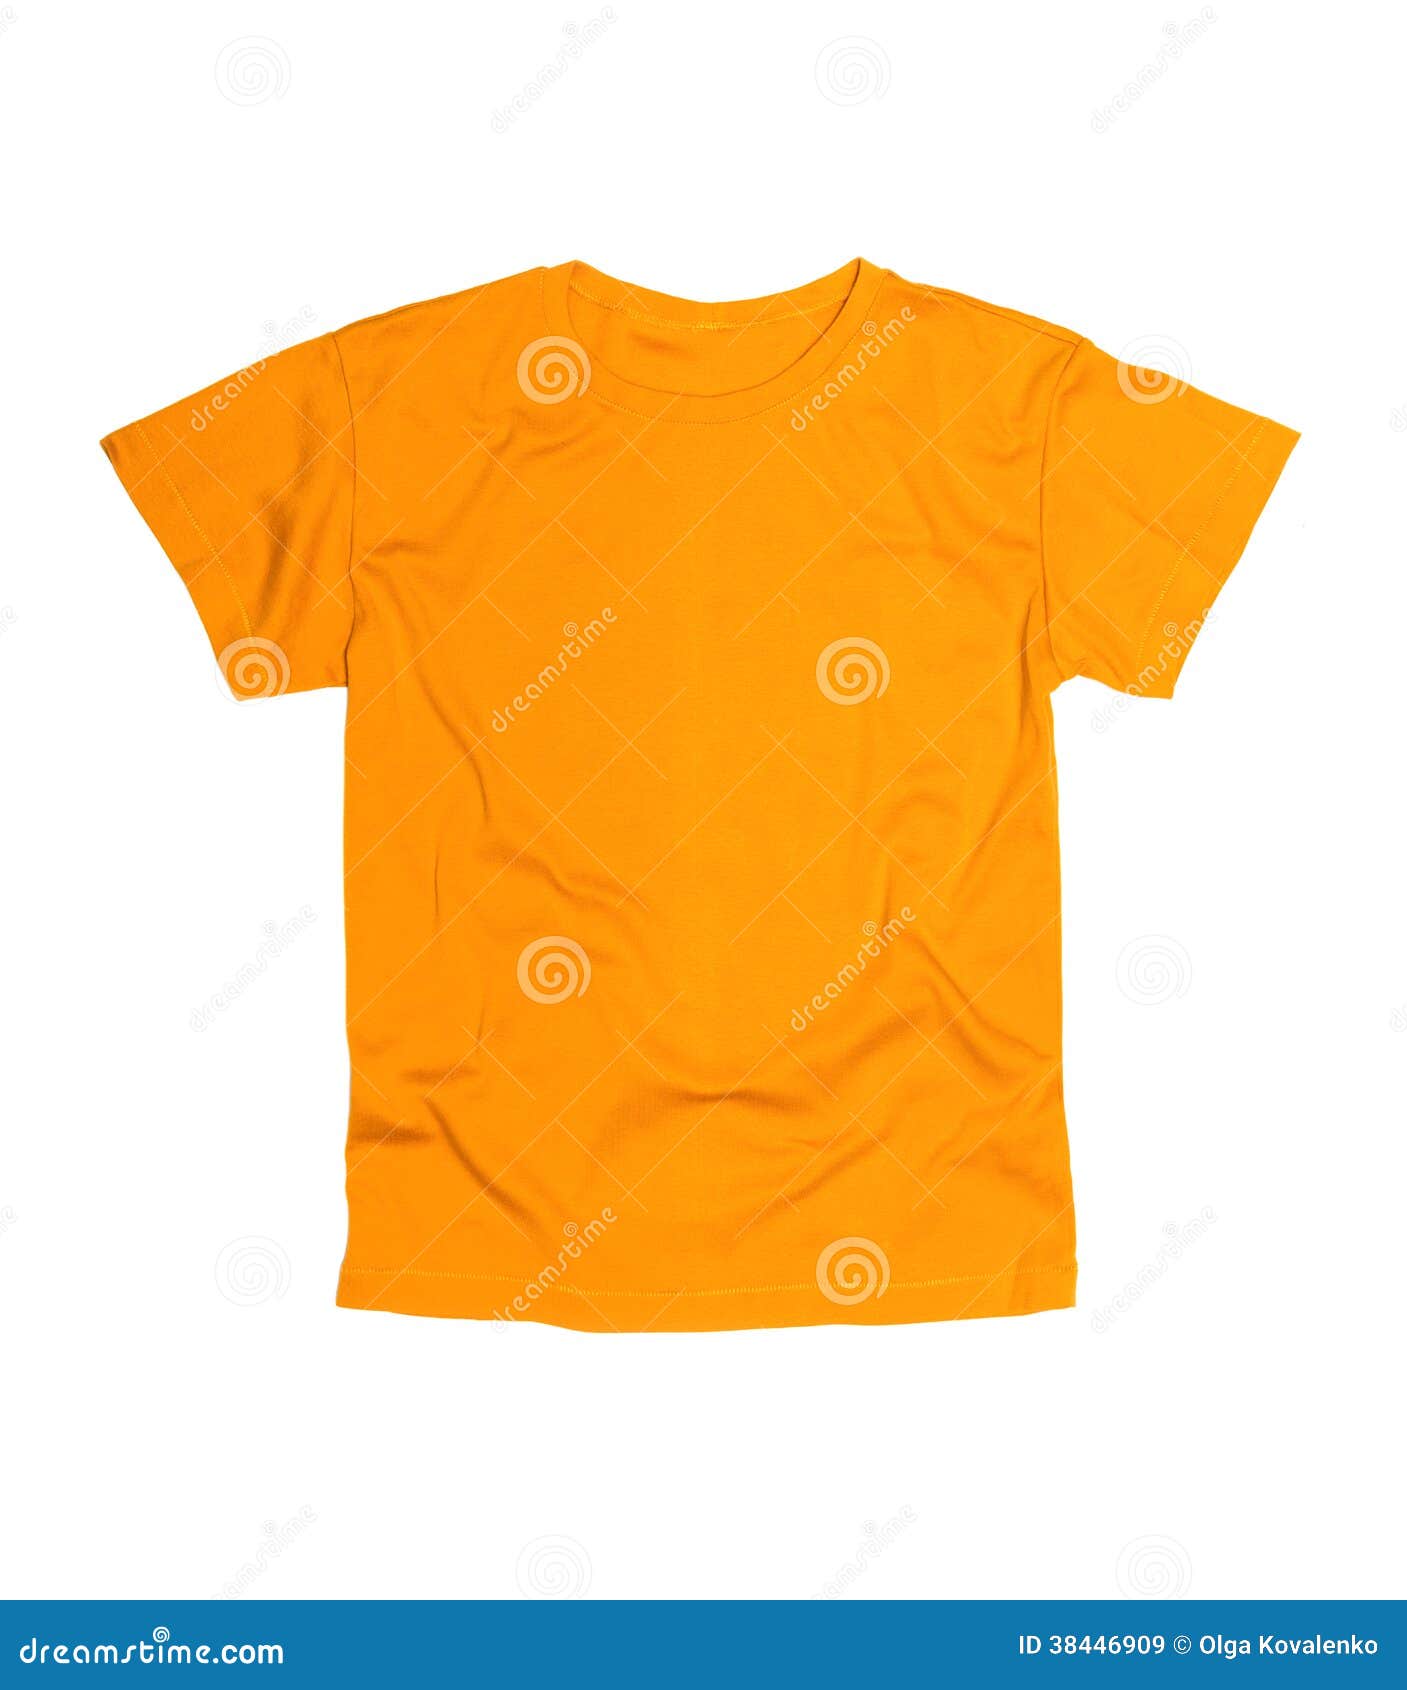 T-shirt isolated stock image. Image of single, advertisement - 38446909